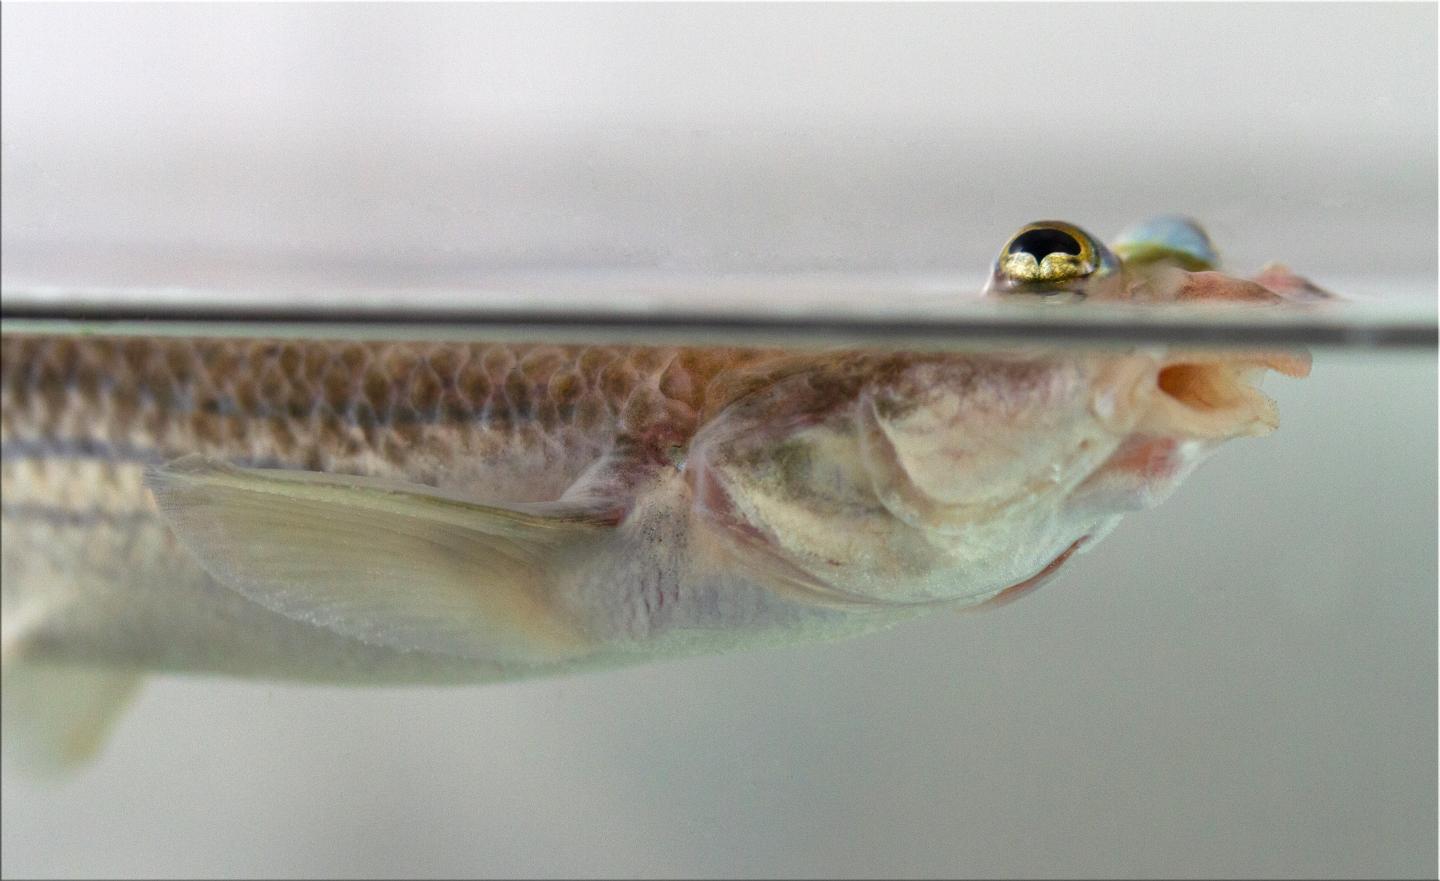 Asymmetric Genitalia in Fish